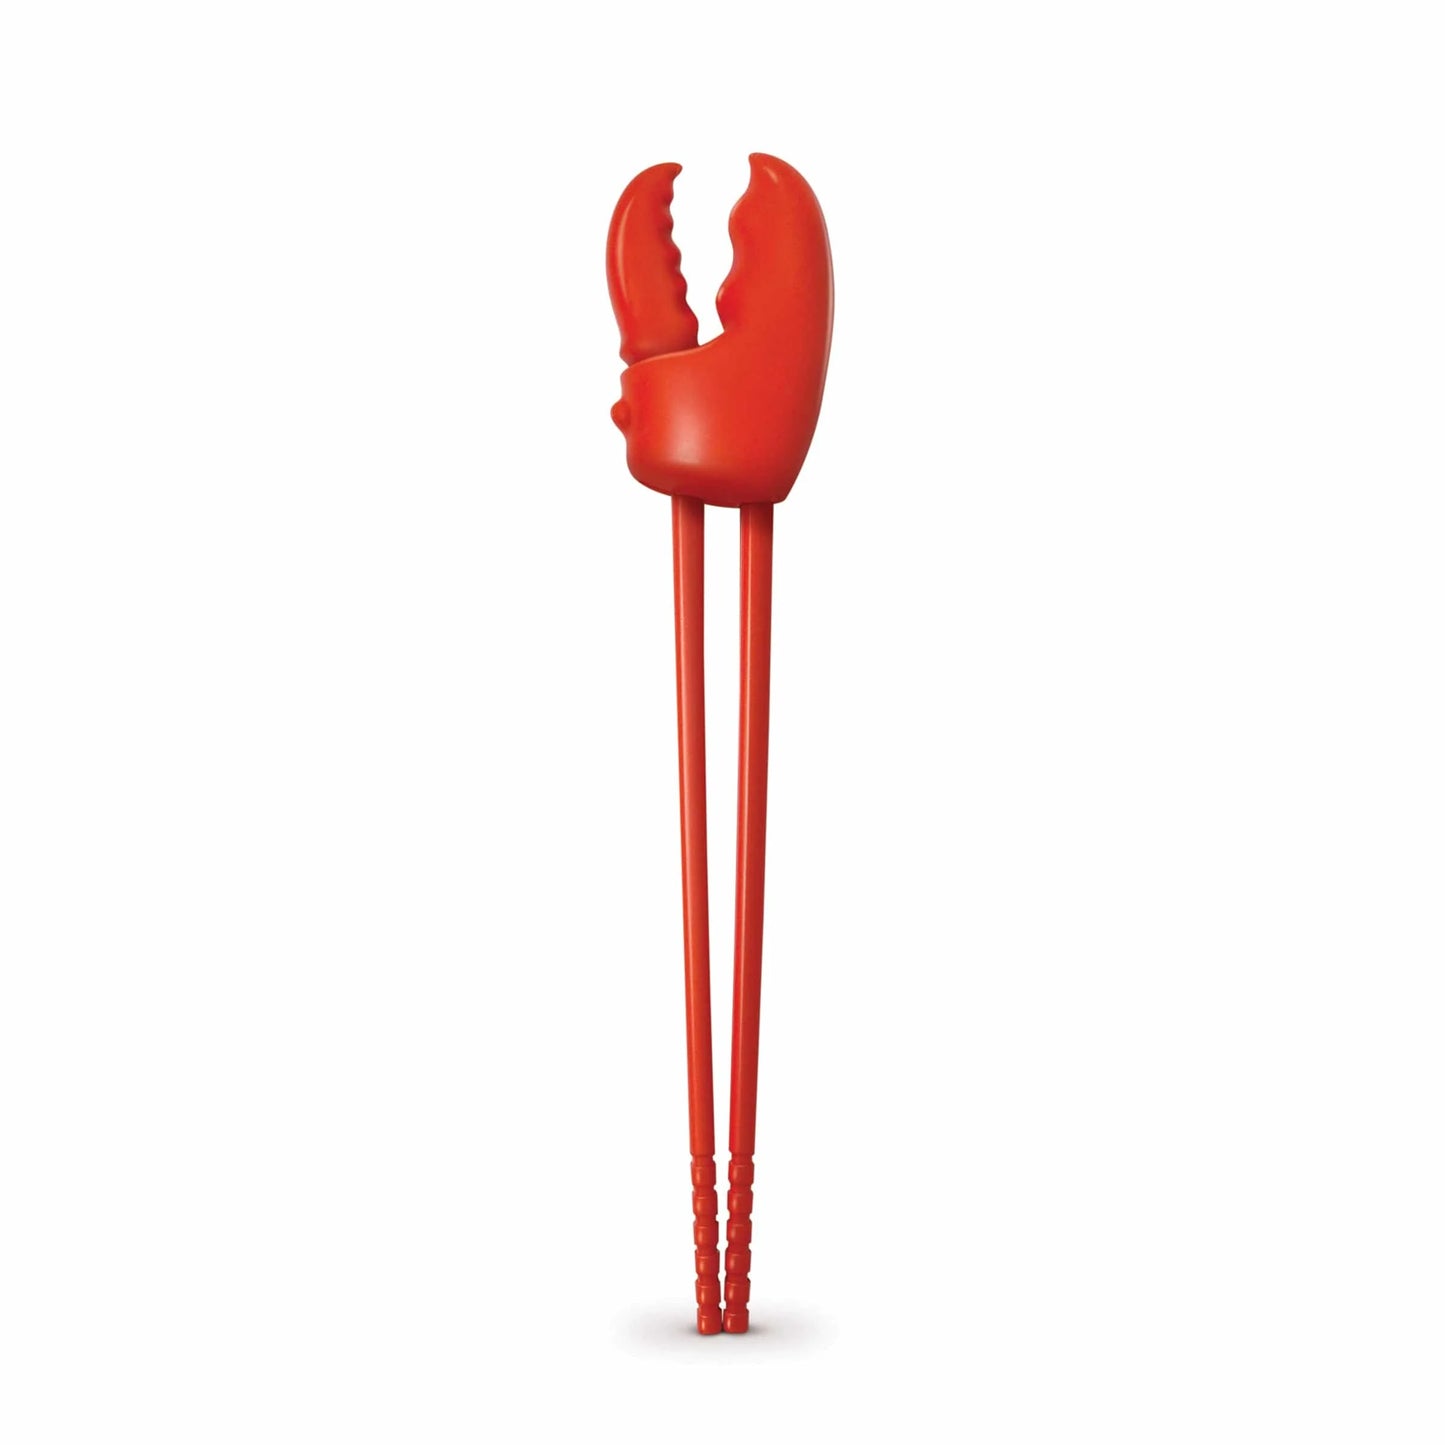 Munchtime - Lobster Claw Chopsticks